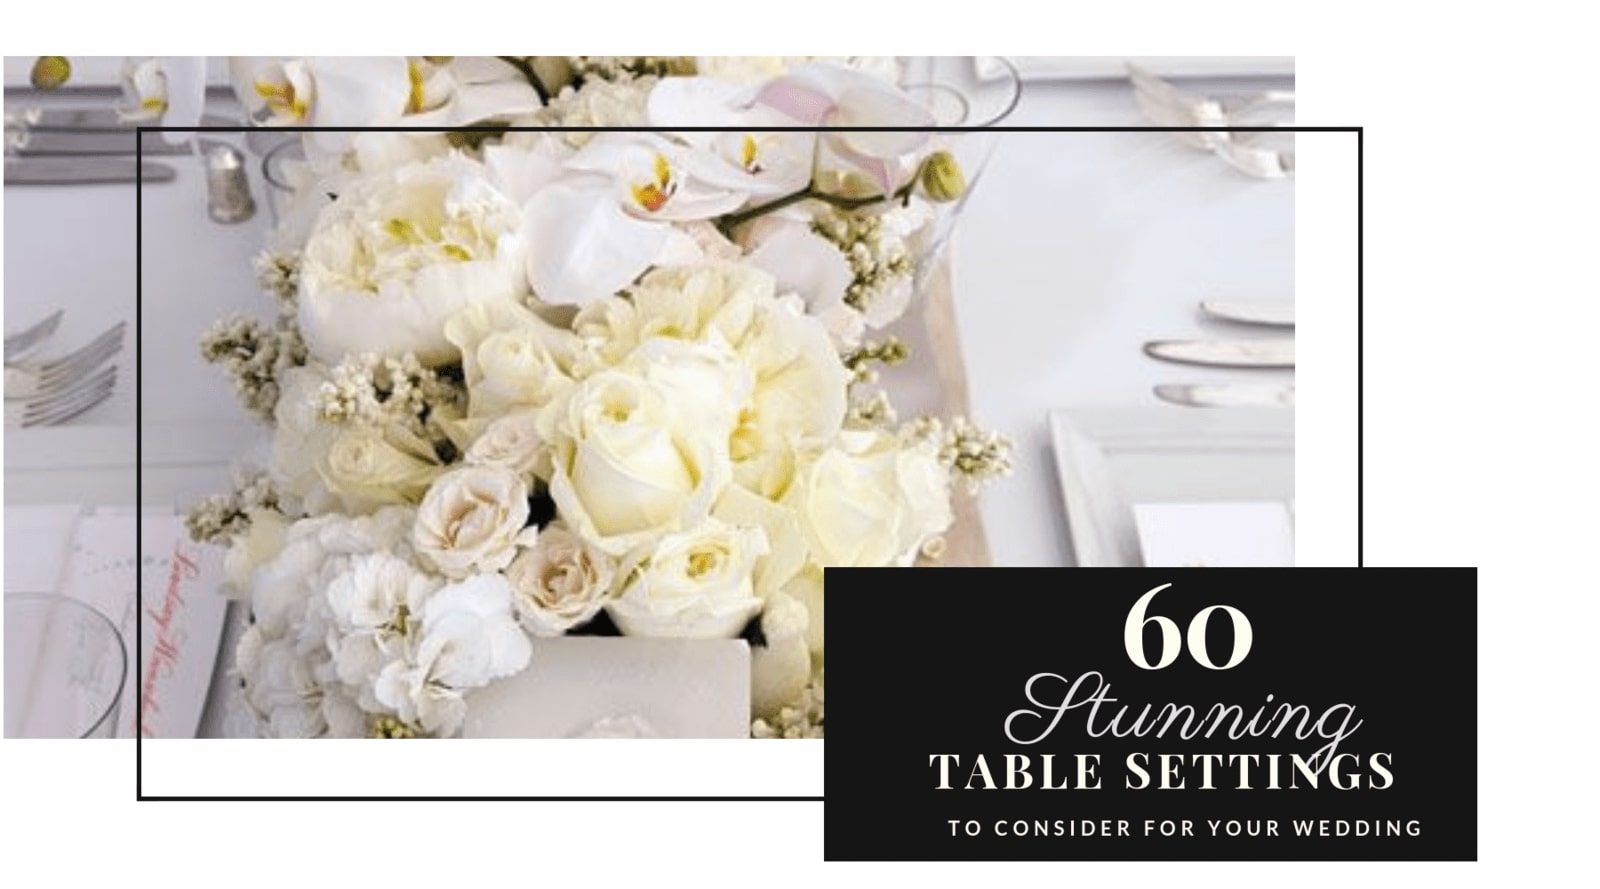 Wedding Table Settings: The prettiest wedding place settings